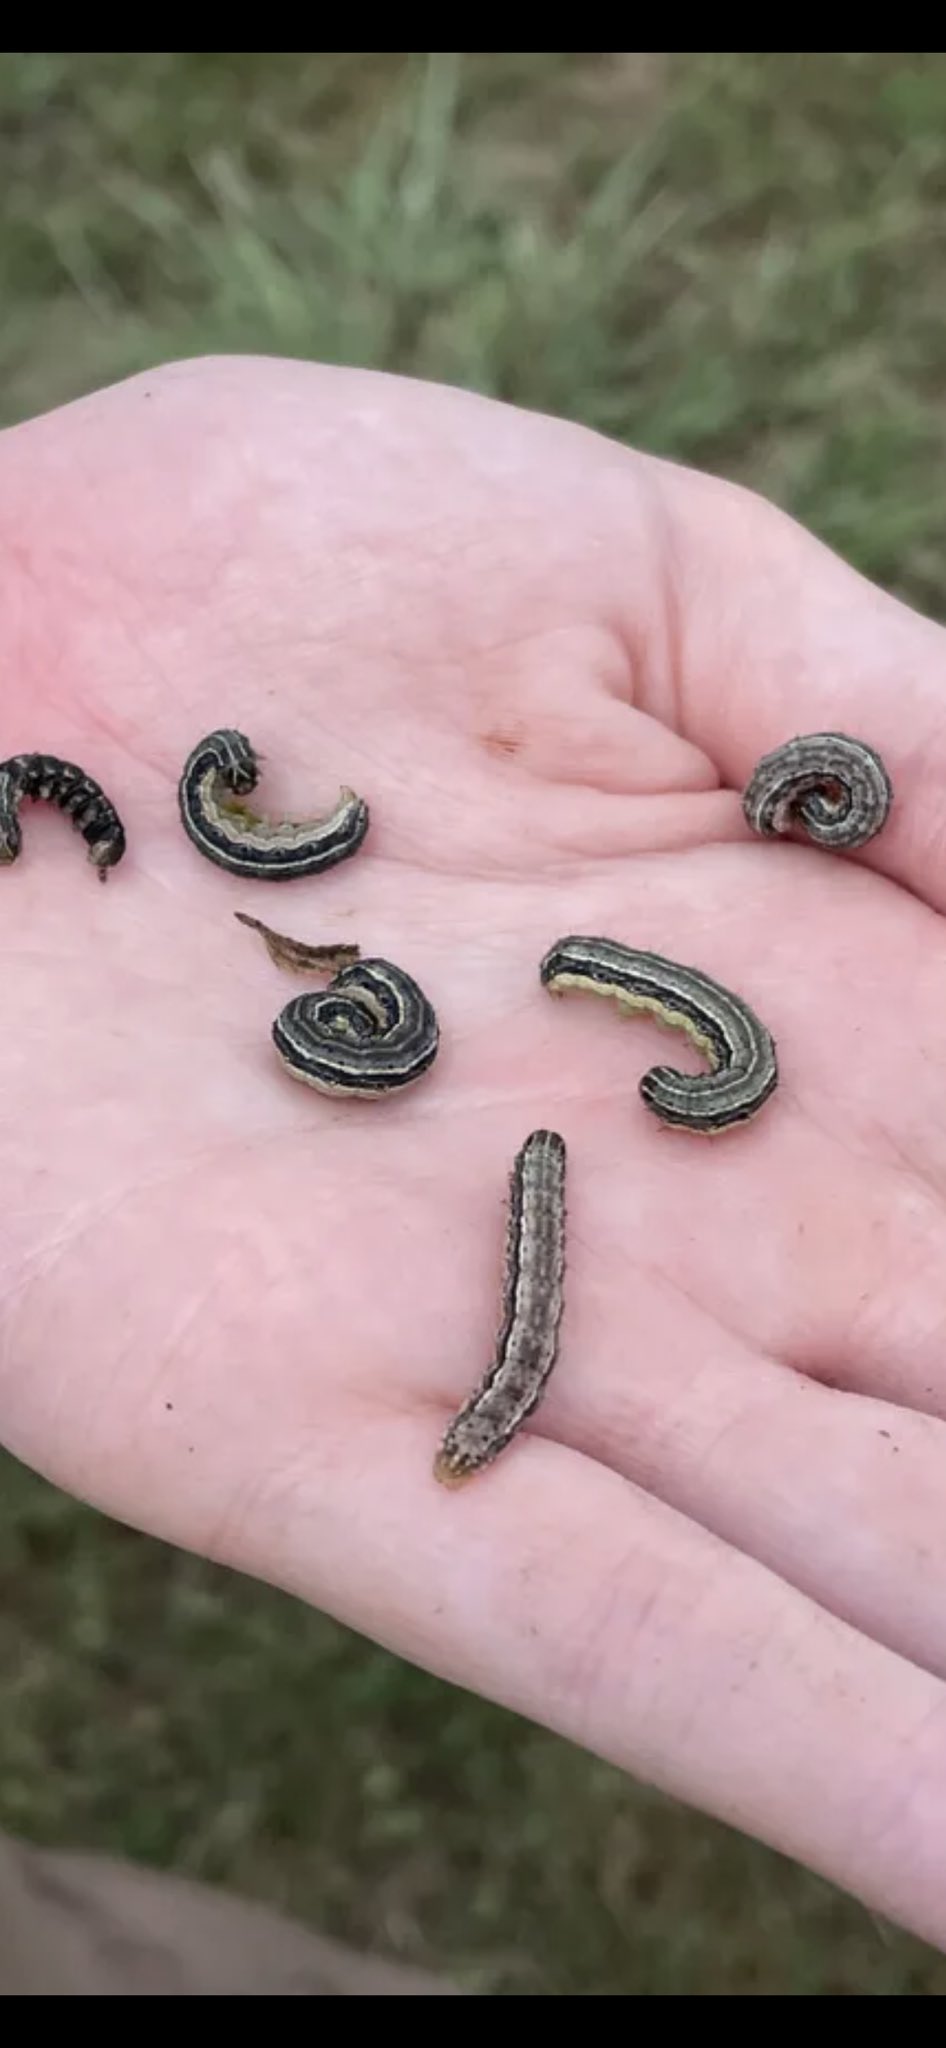 armyworm larvae